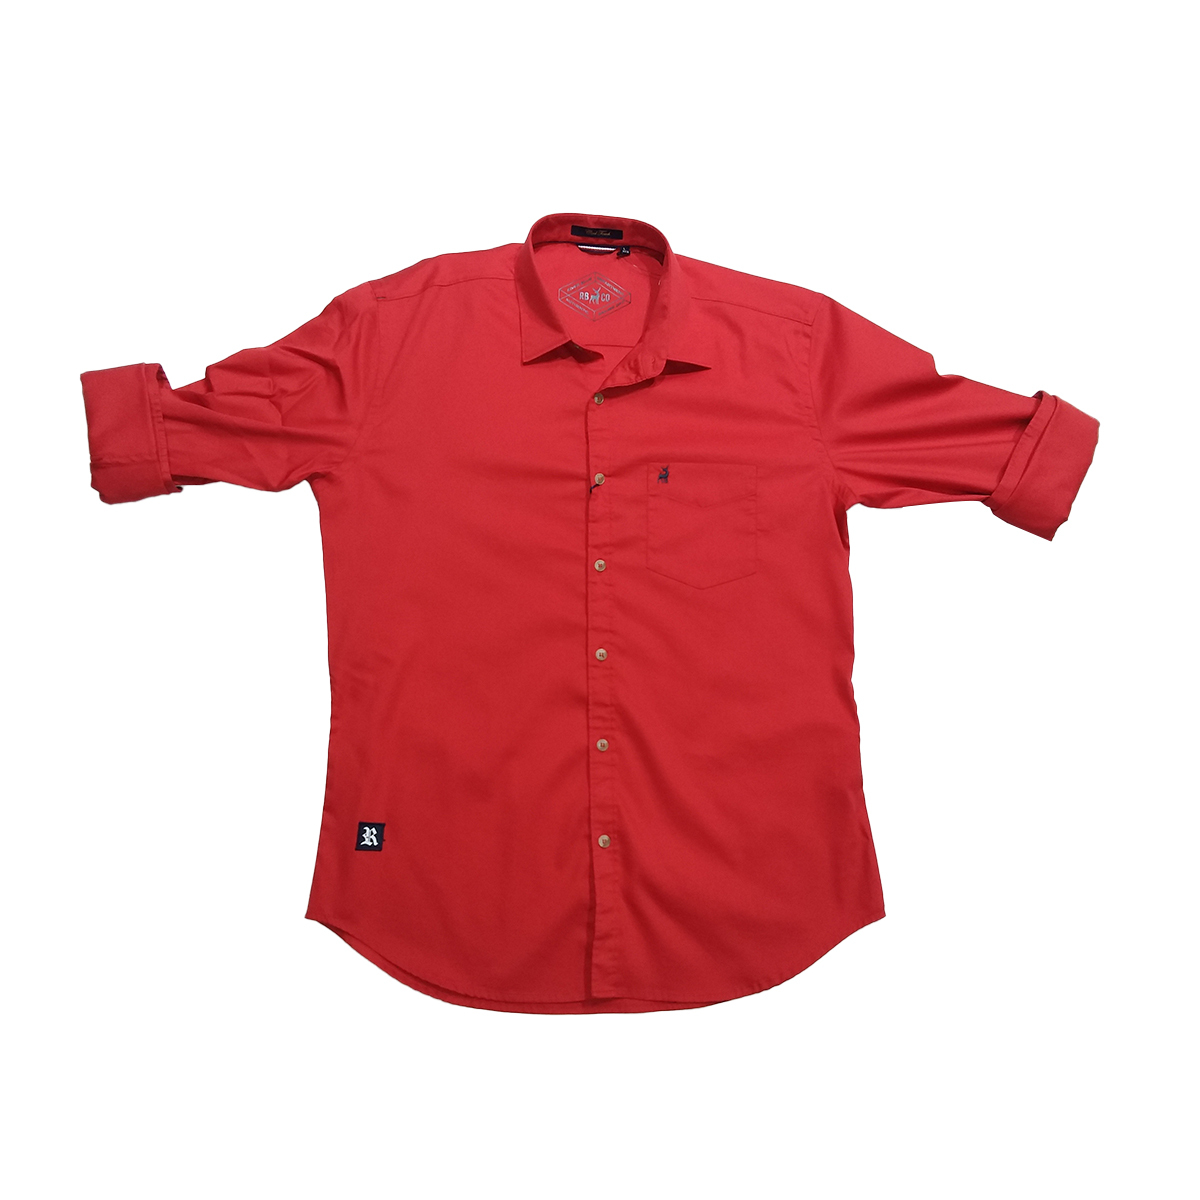 River Blue Mens Shirt  Sm-02979  Full Sleeves Red